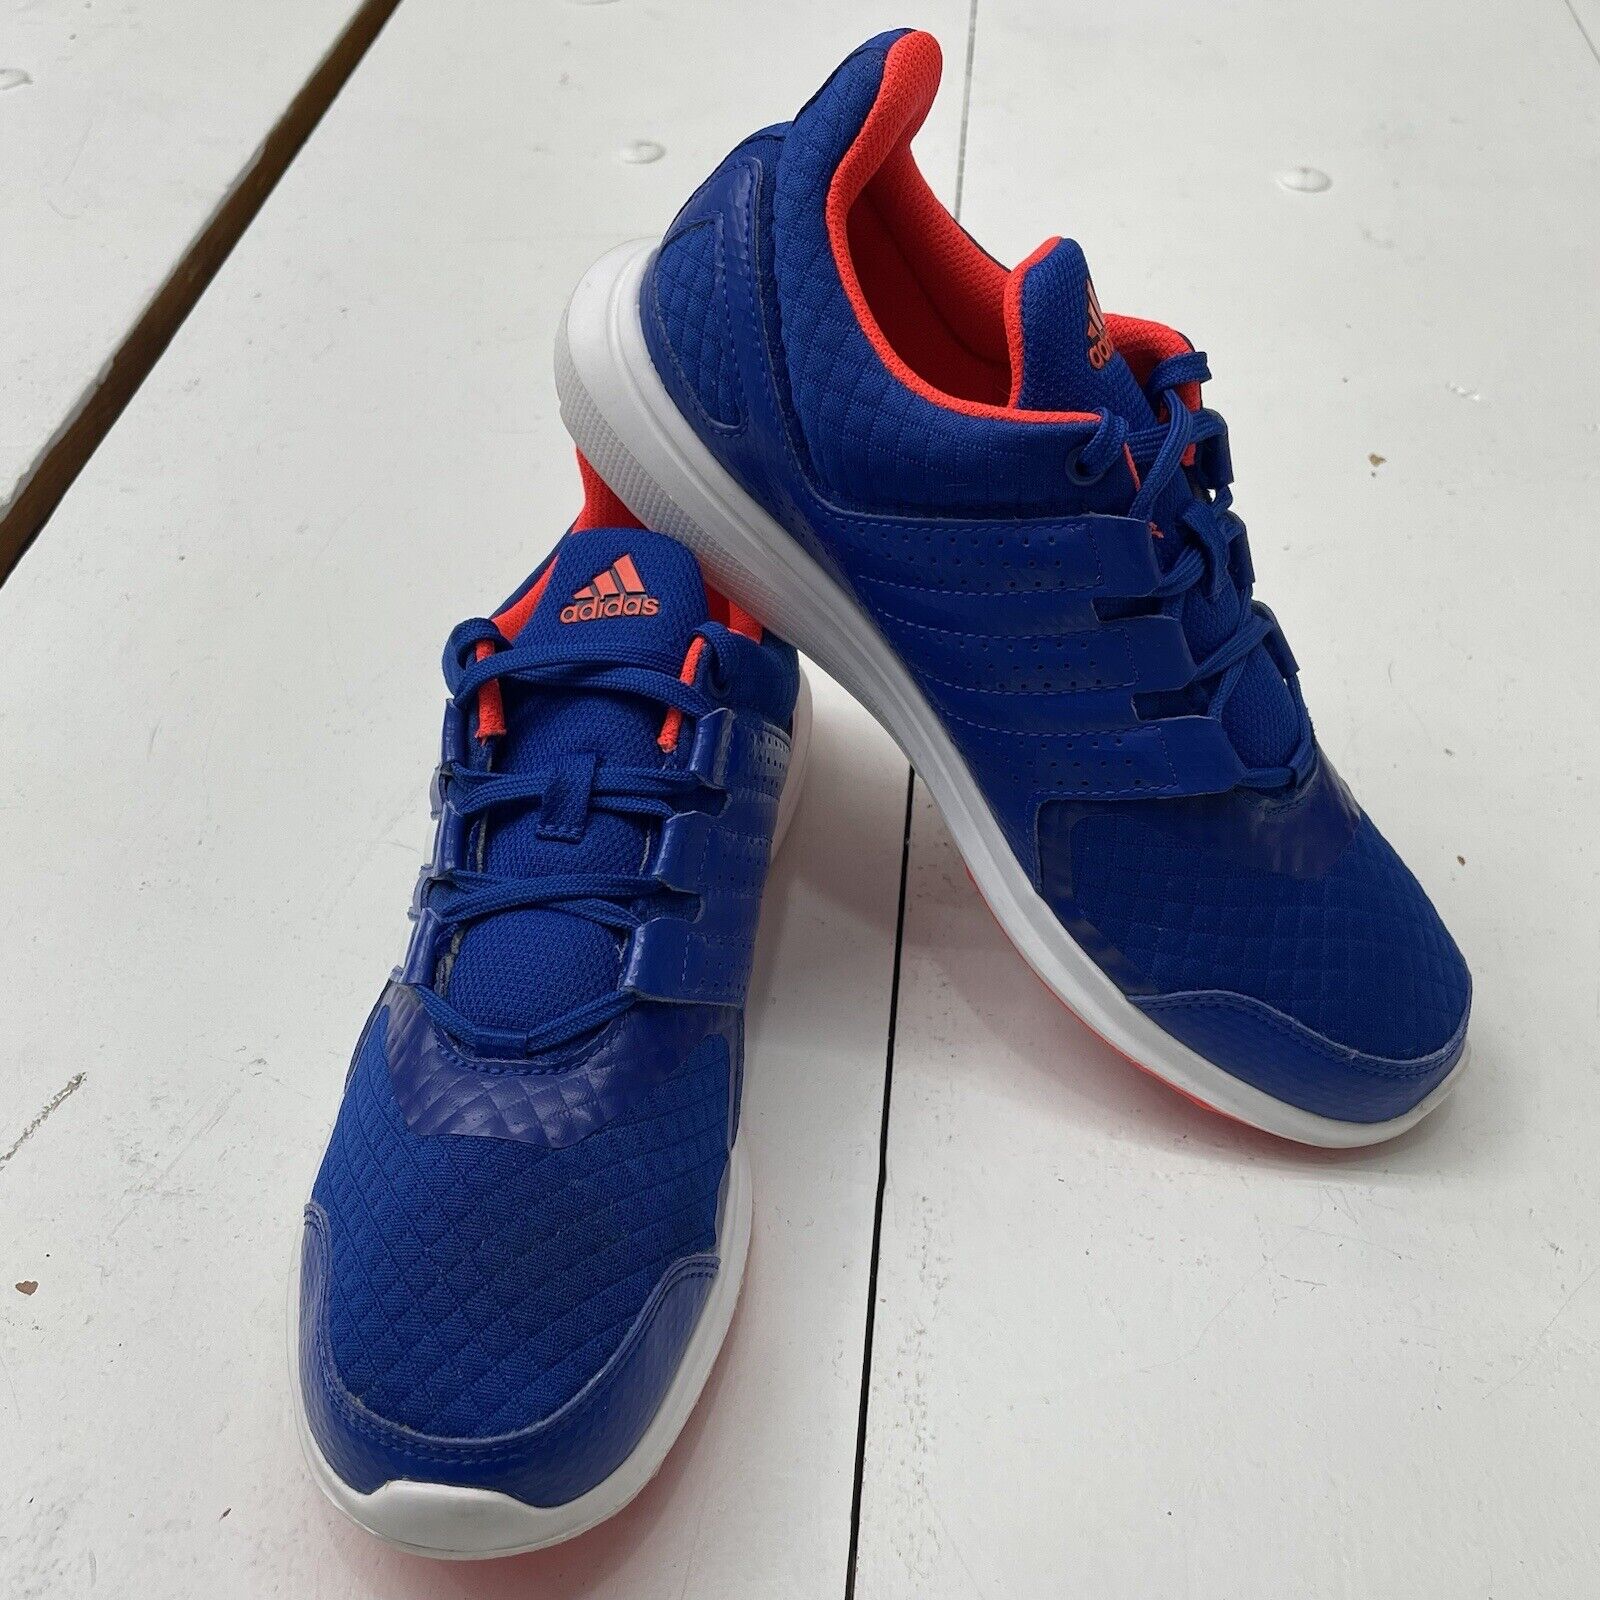 Adidas Blue Orange Eco Ortholite Shoes Athletic Sneakers Running Mens Size 6